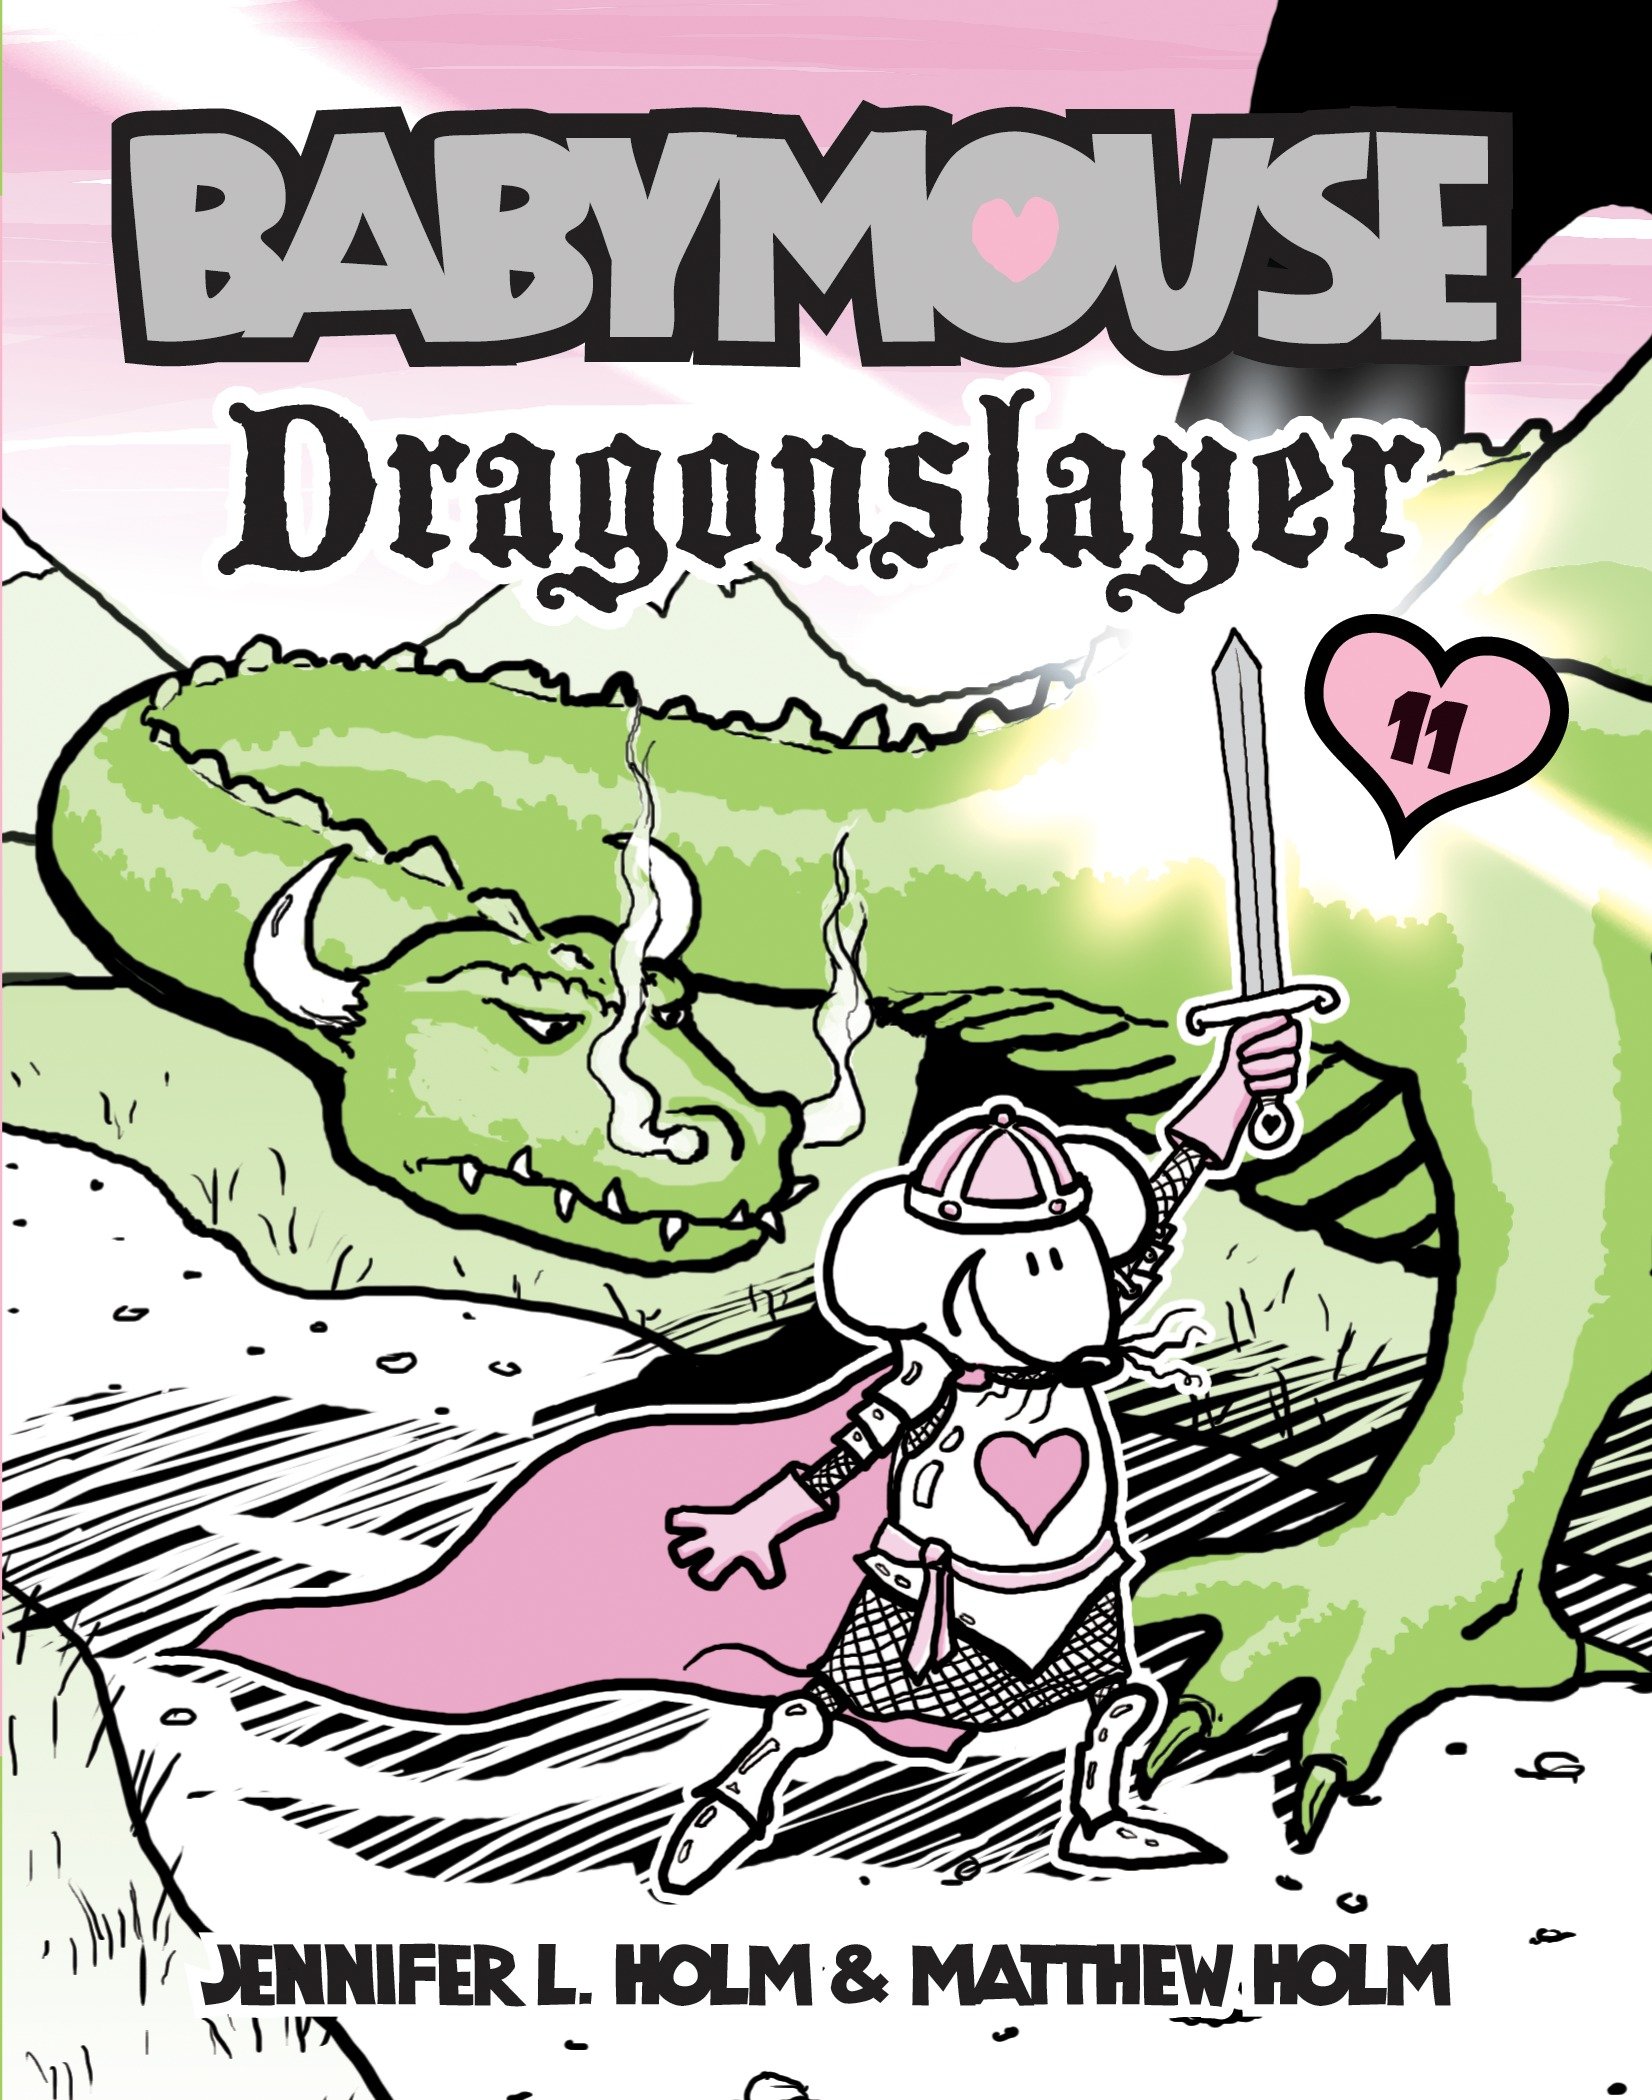 Babymouse Dragonslayer